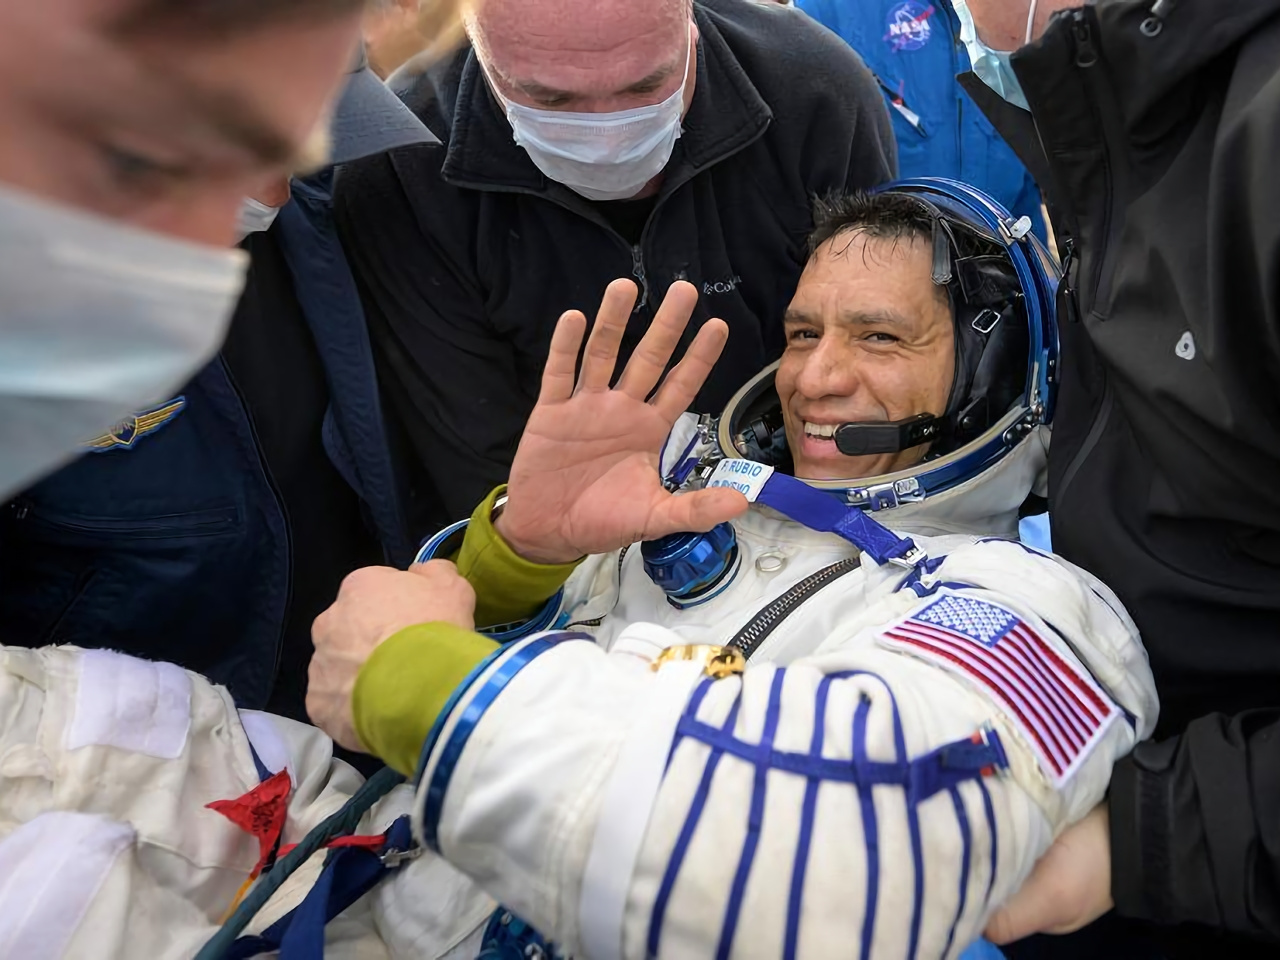 ＮＡＳＡのルビオ宇宙飛行士が１年ぶり帰還、トラブルで宇宙滞在記録更新